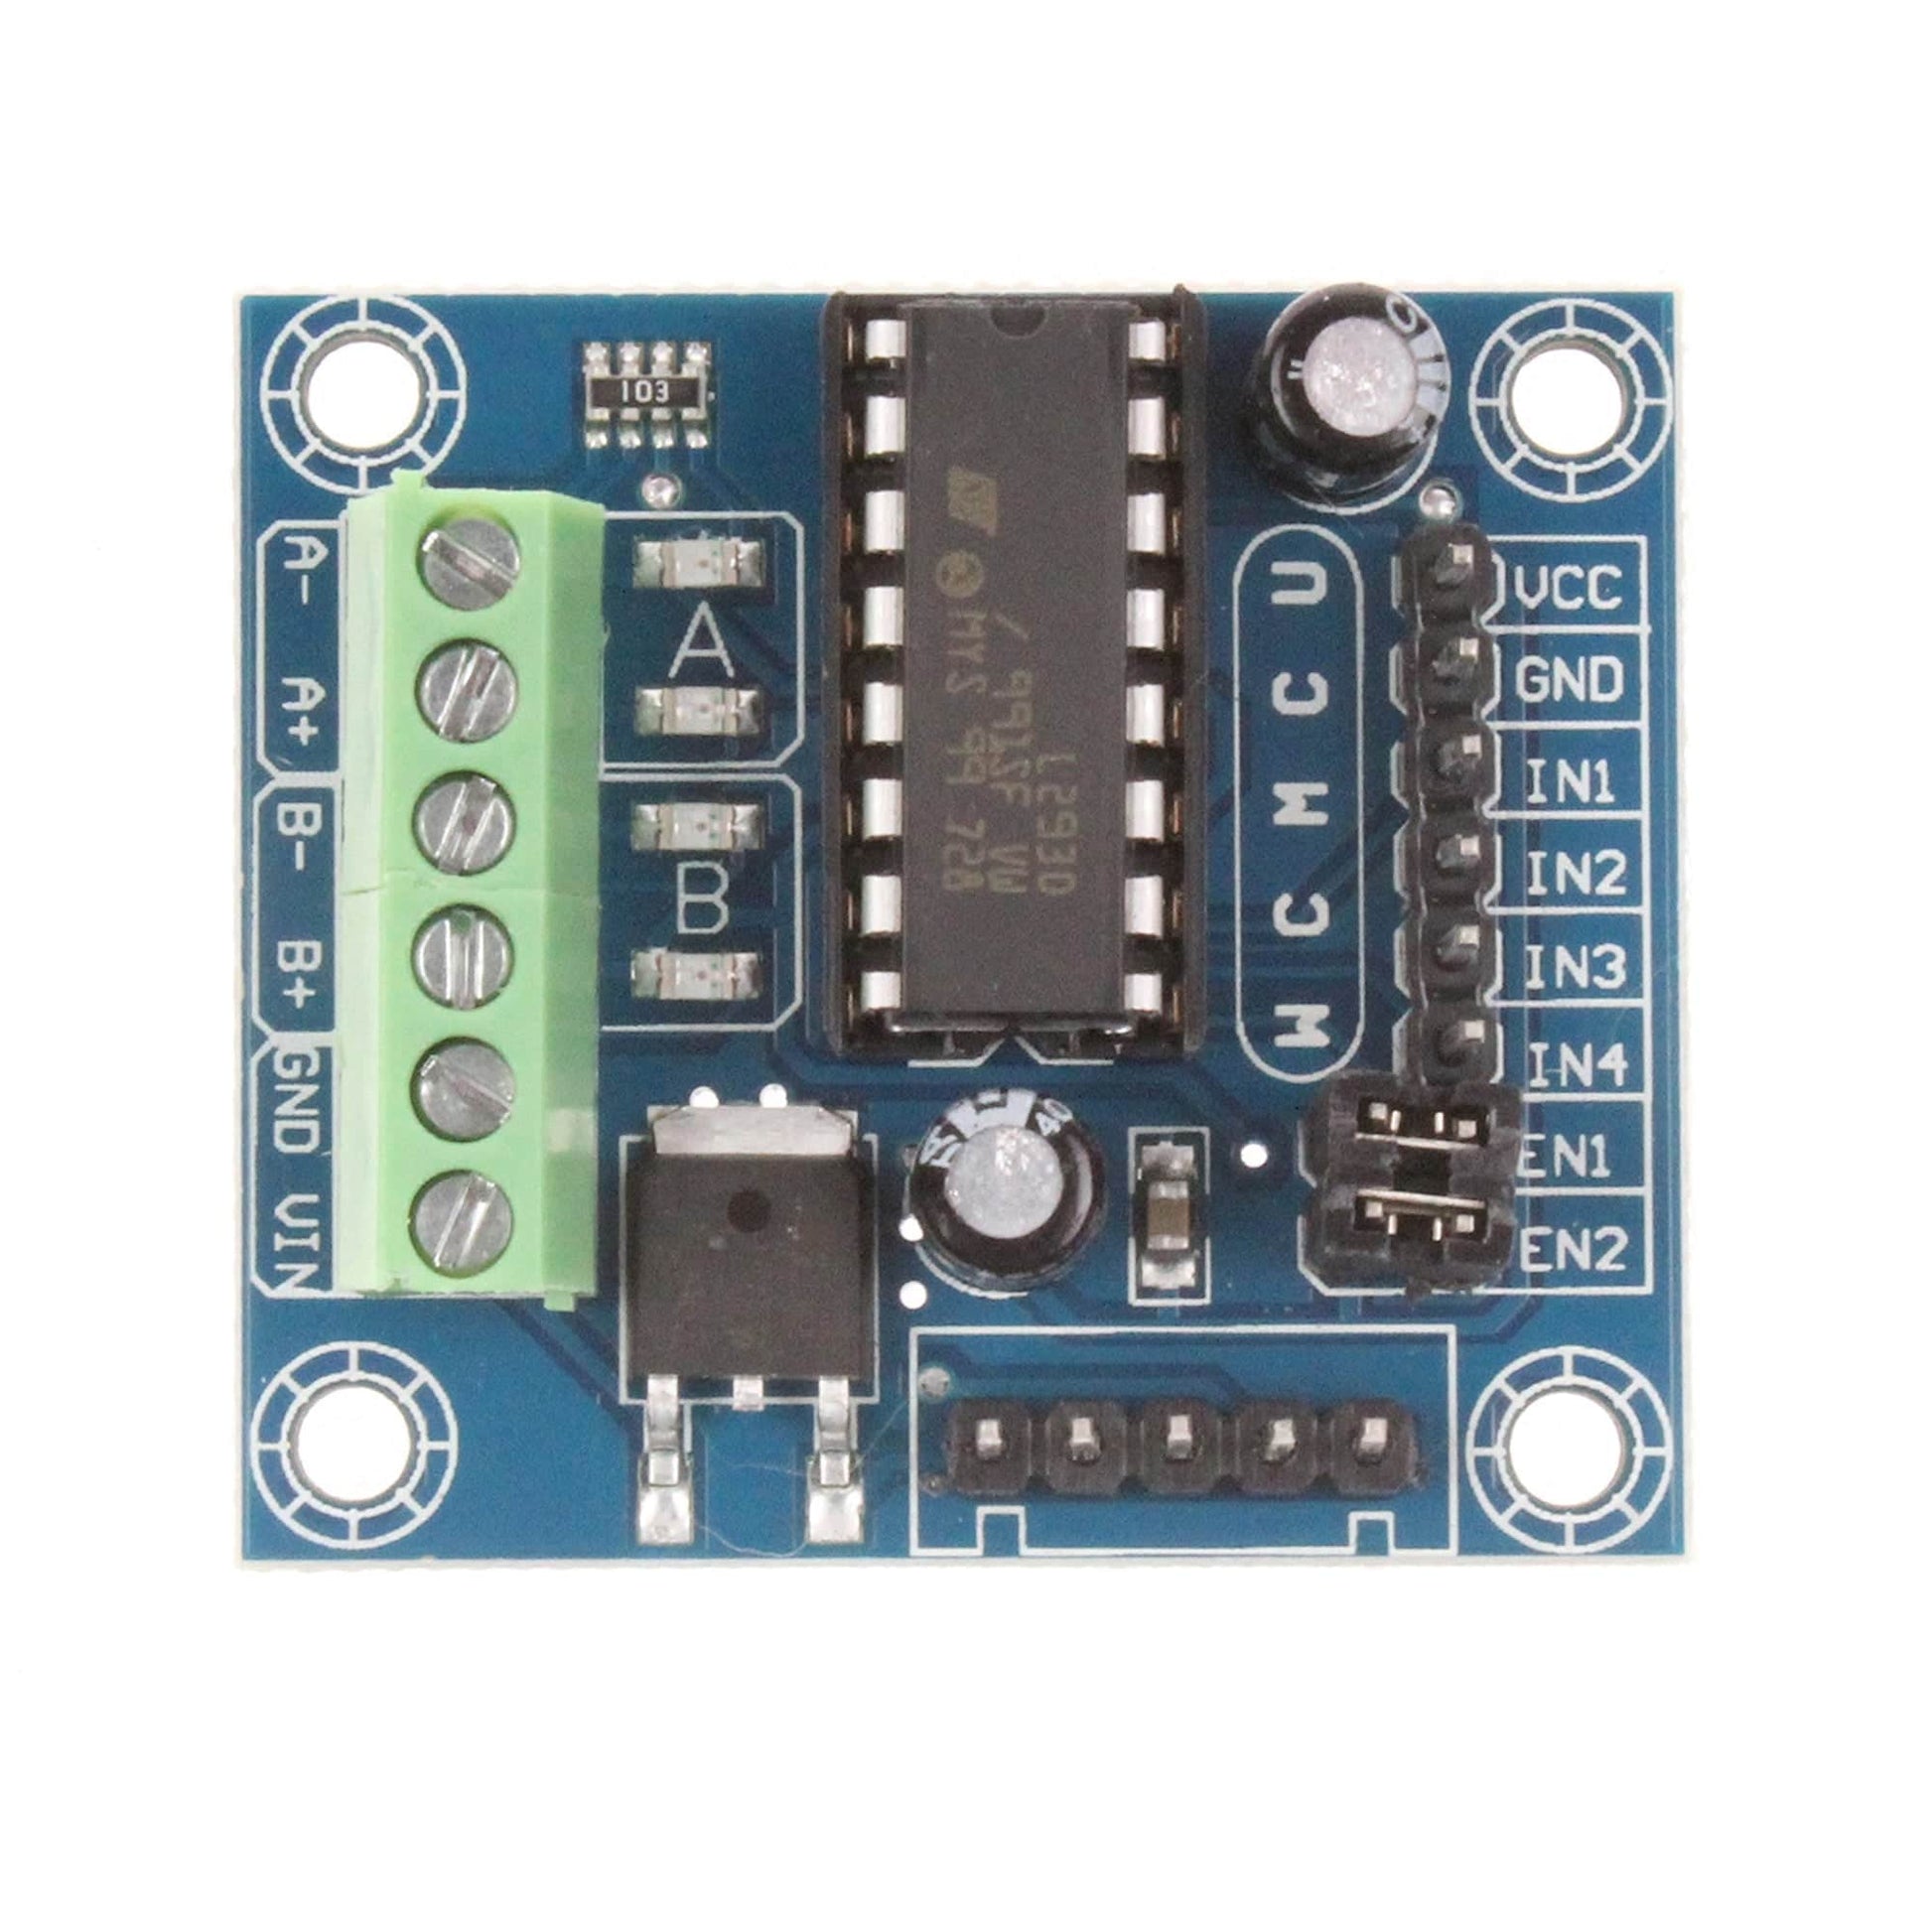 L293D Motor Driver Module for Arduino Boards